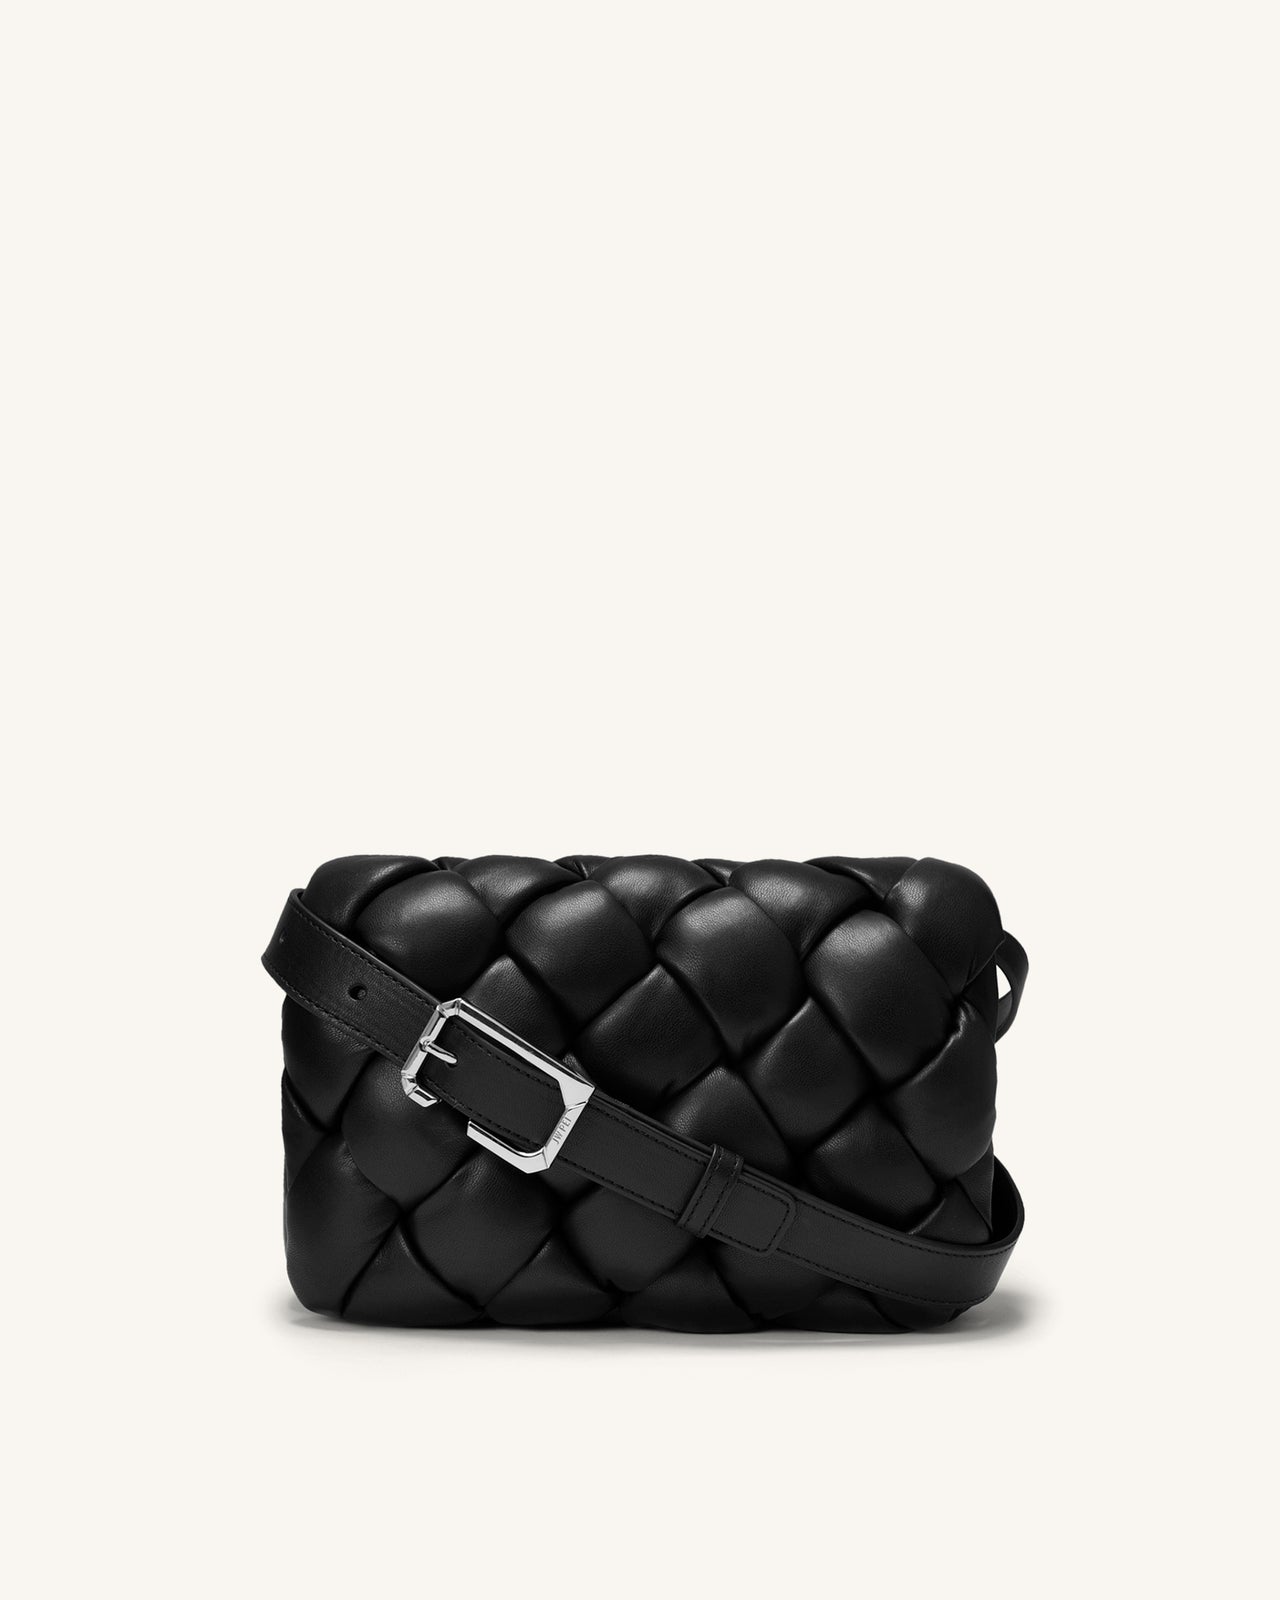 JW Pei Gabbi Handbag Vegan Leather Brown Crescent Shape With Ruched Handle  NWOT